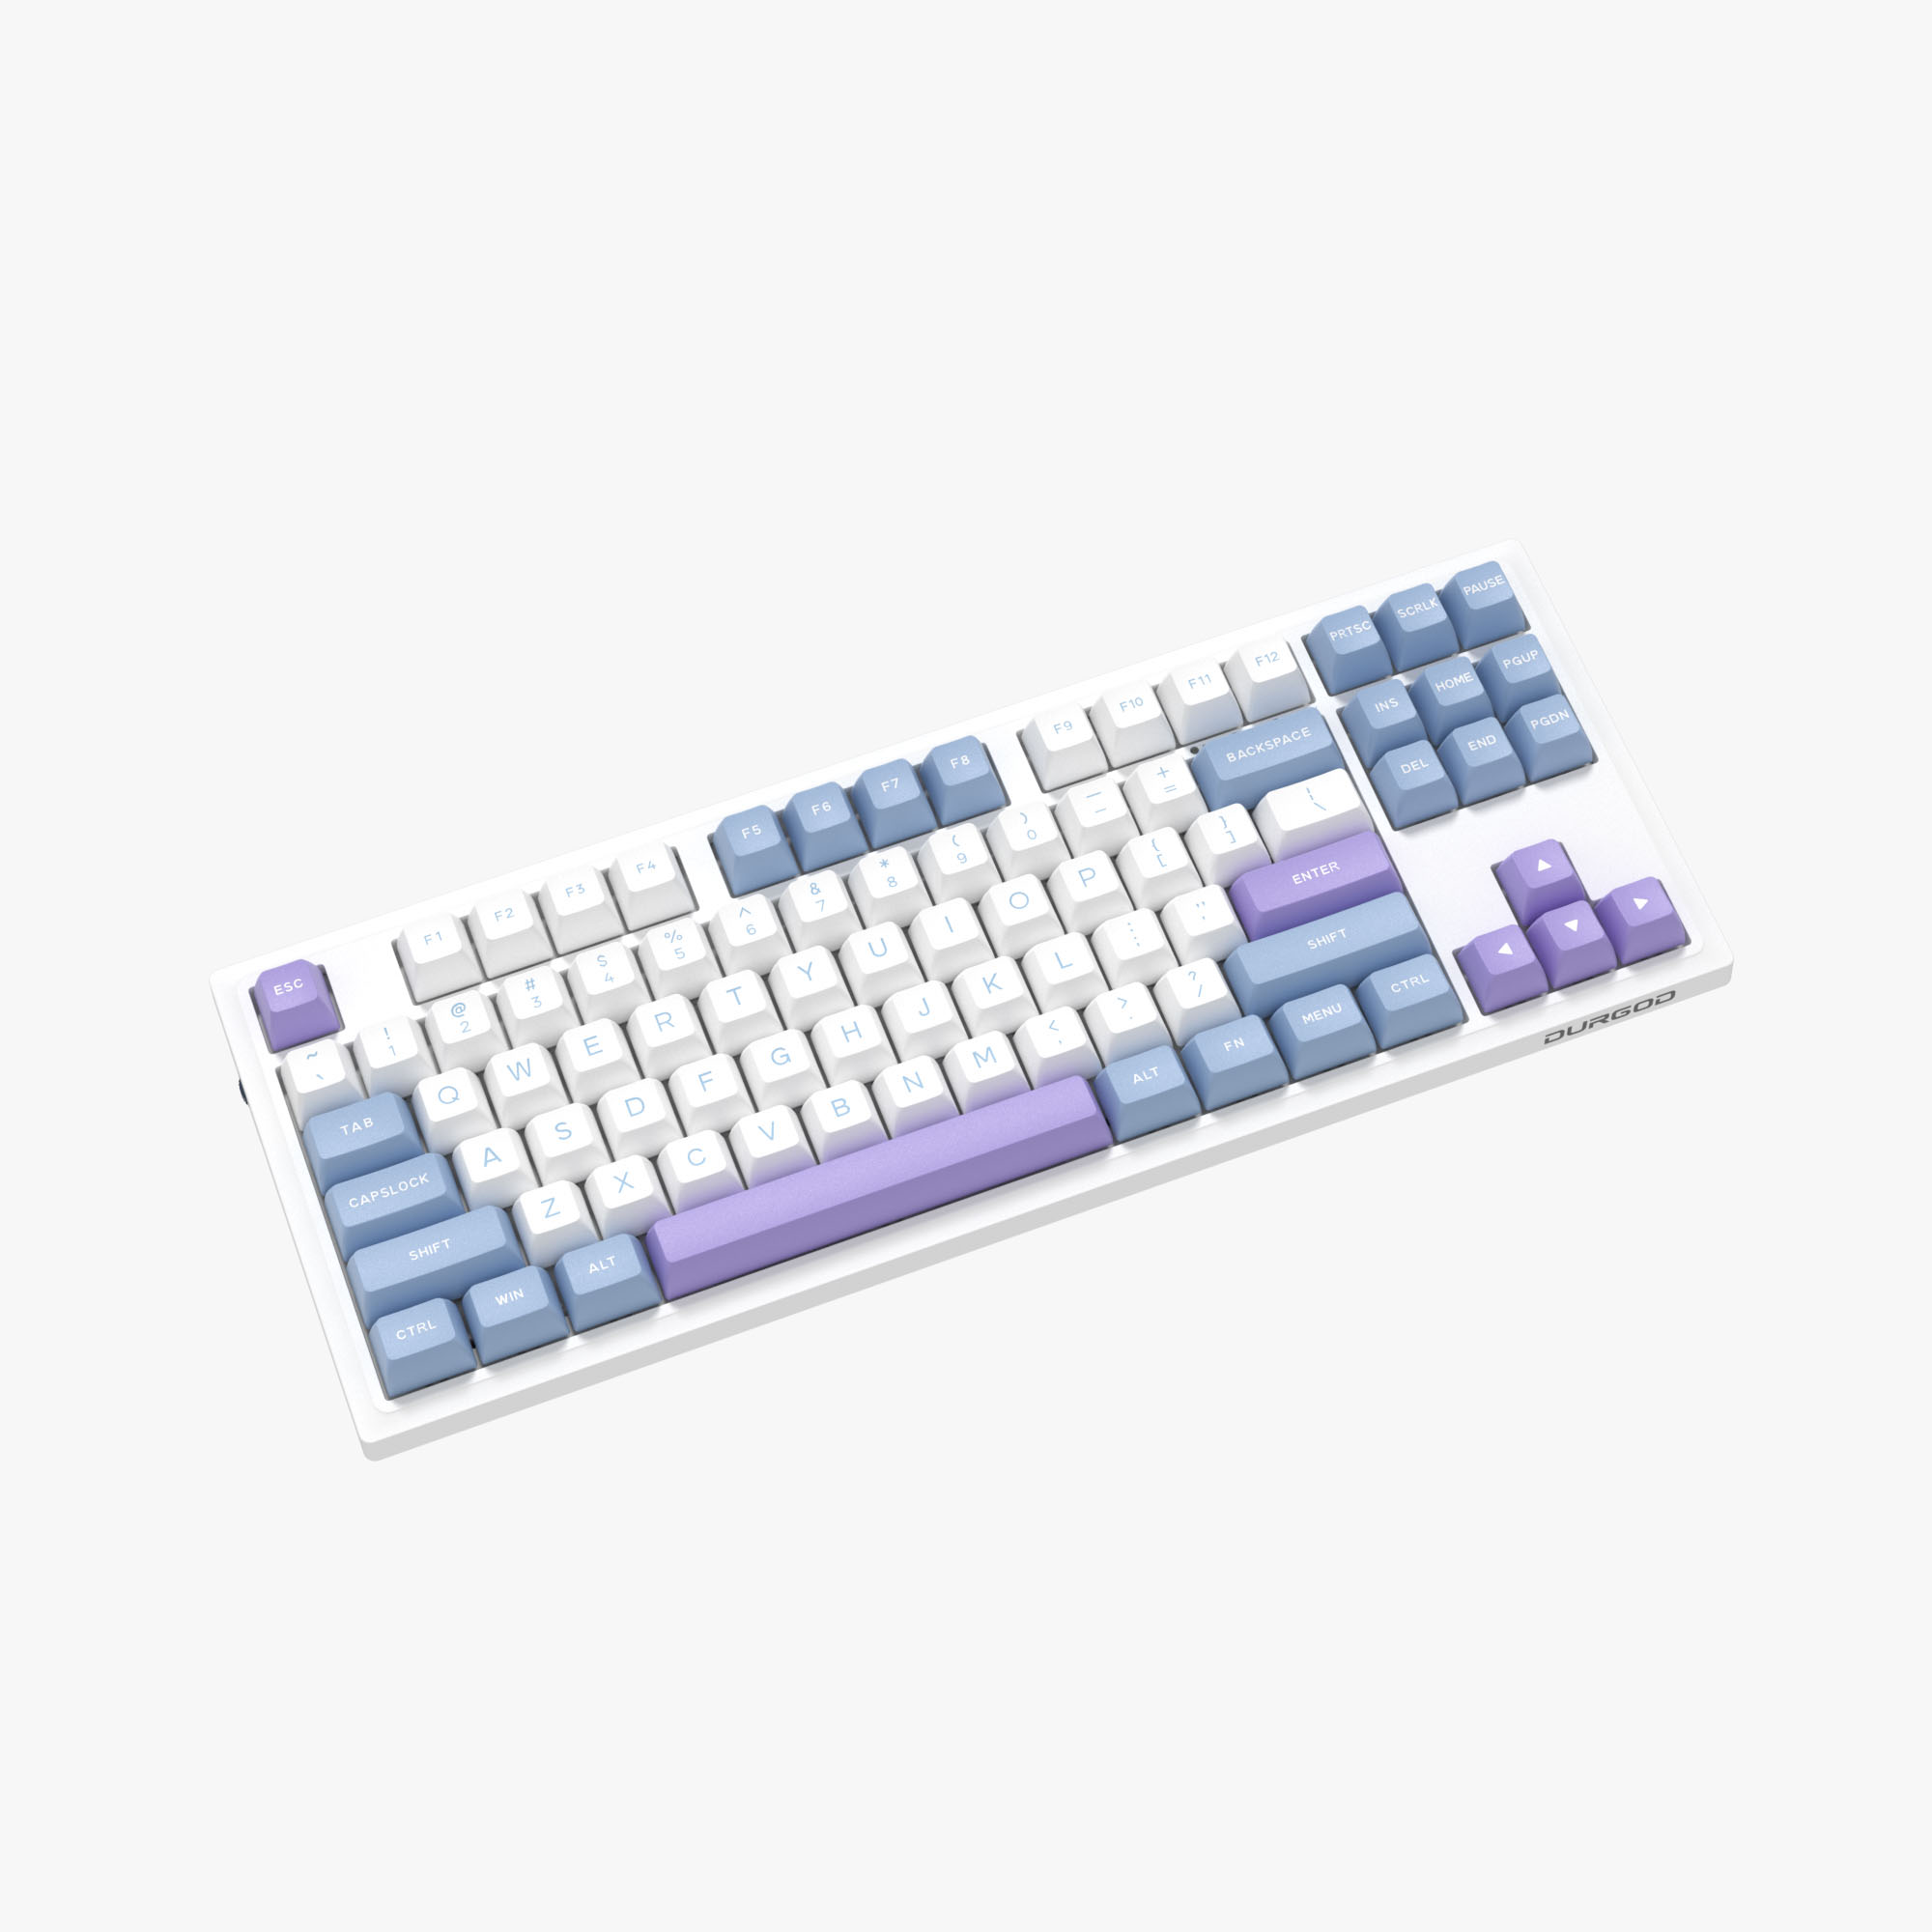 K100w icy Smoothie mechanical keyboard